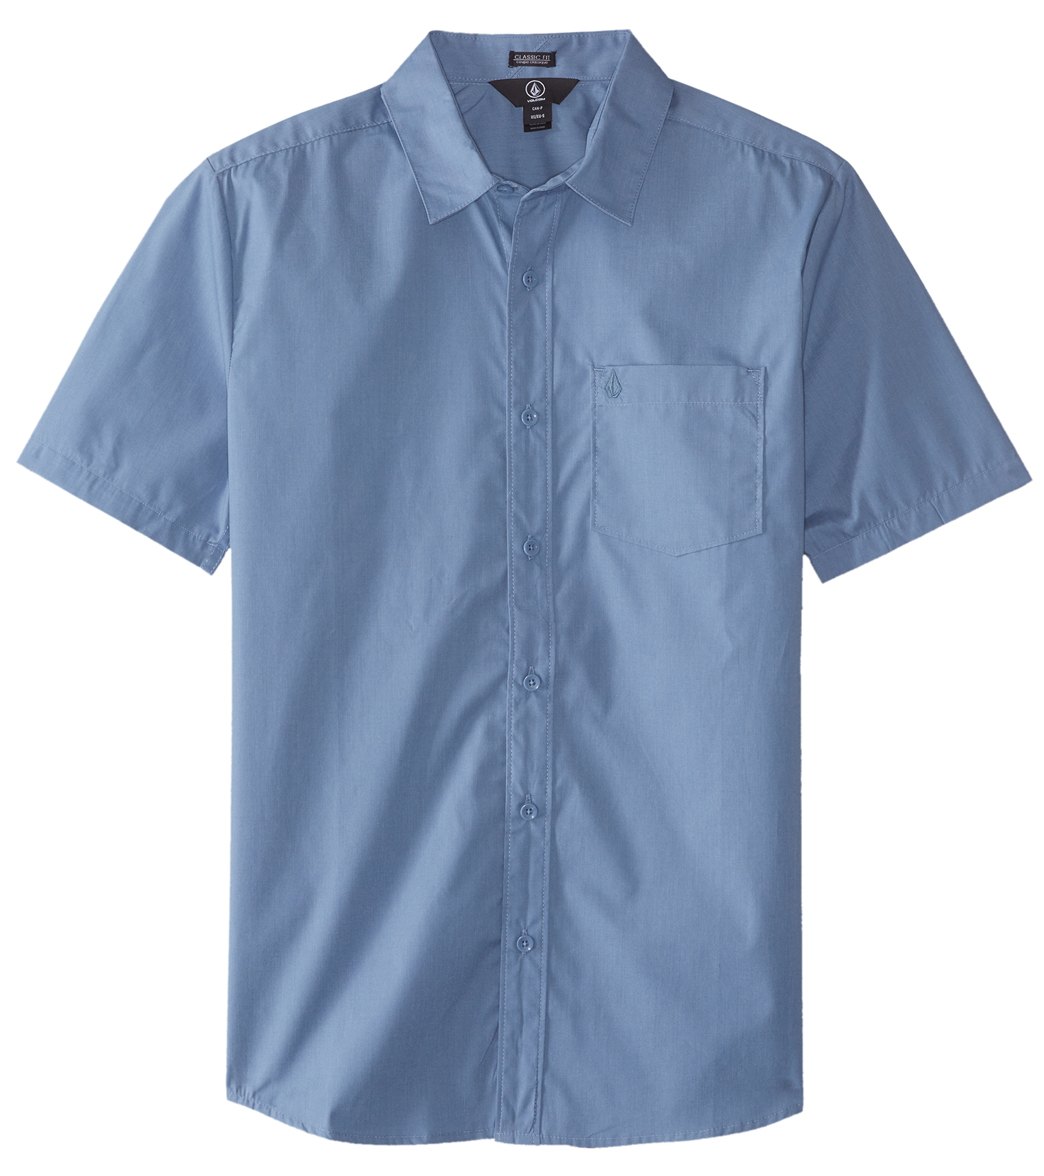 Volcom Men's Everett Solid Short Sleeve Shirt - Wrecked Indigo X-Small Cotton/Polyester - Swimoutlet.com